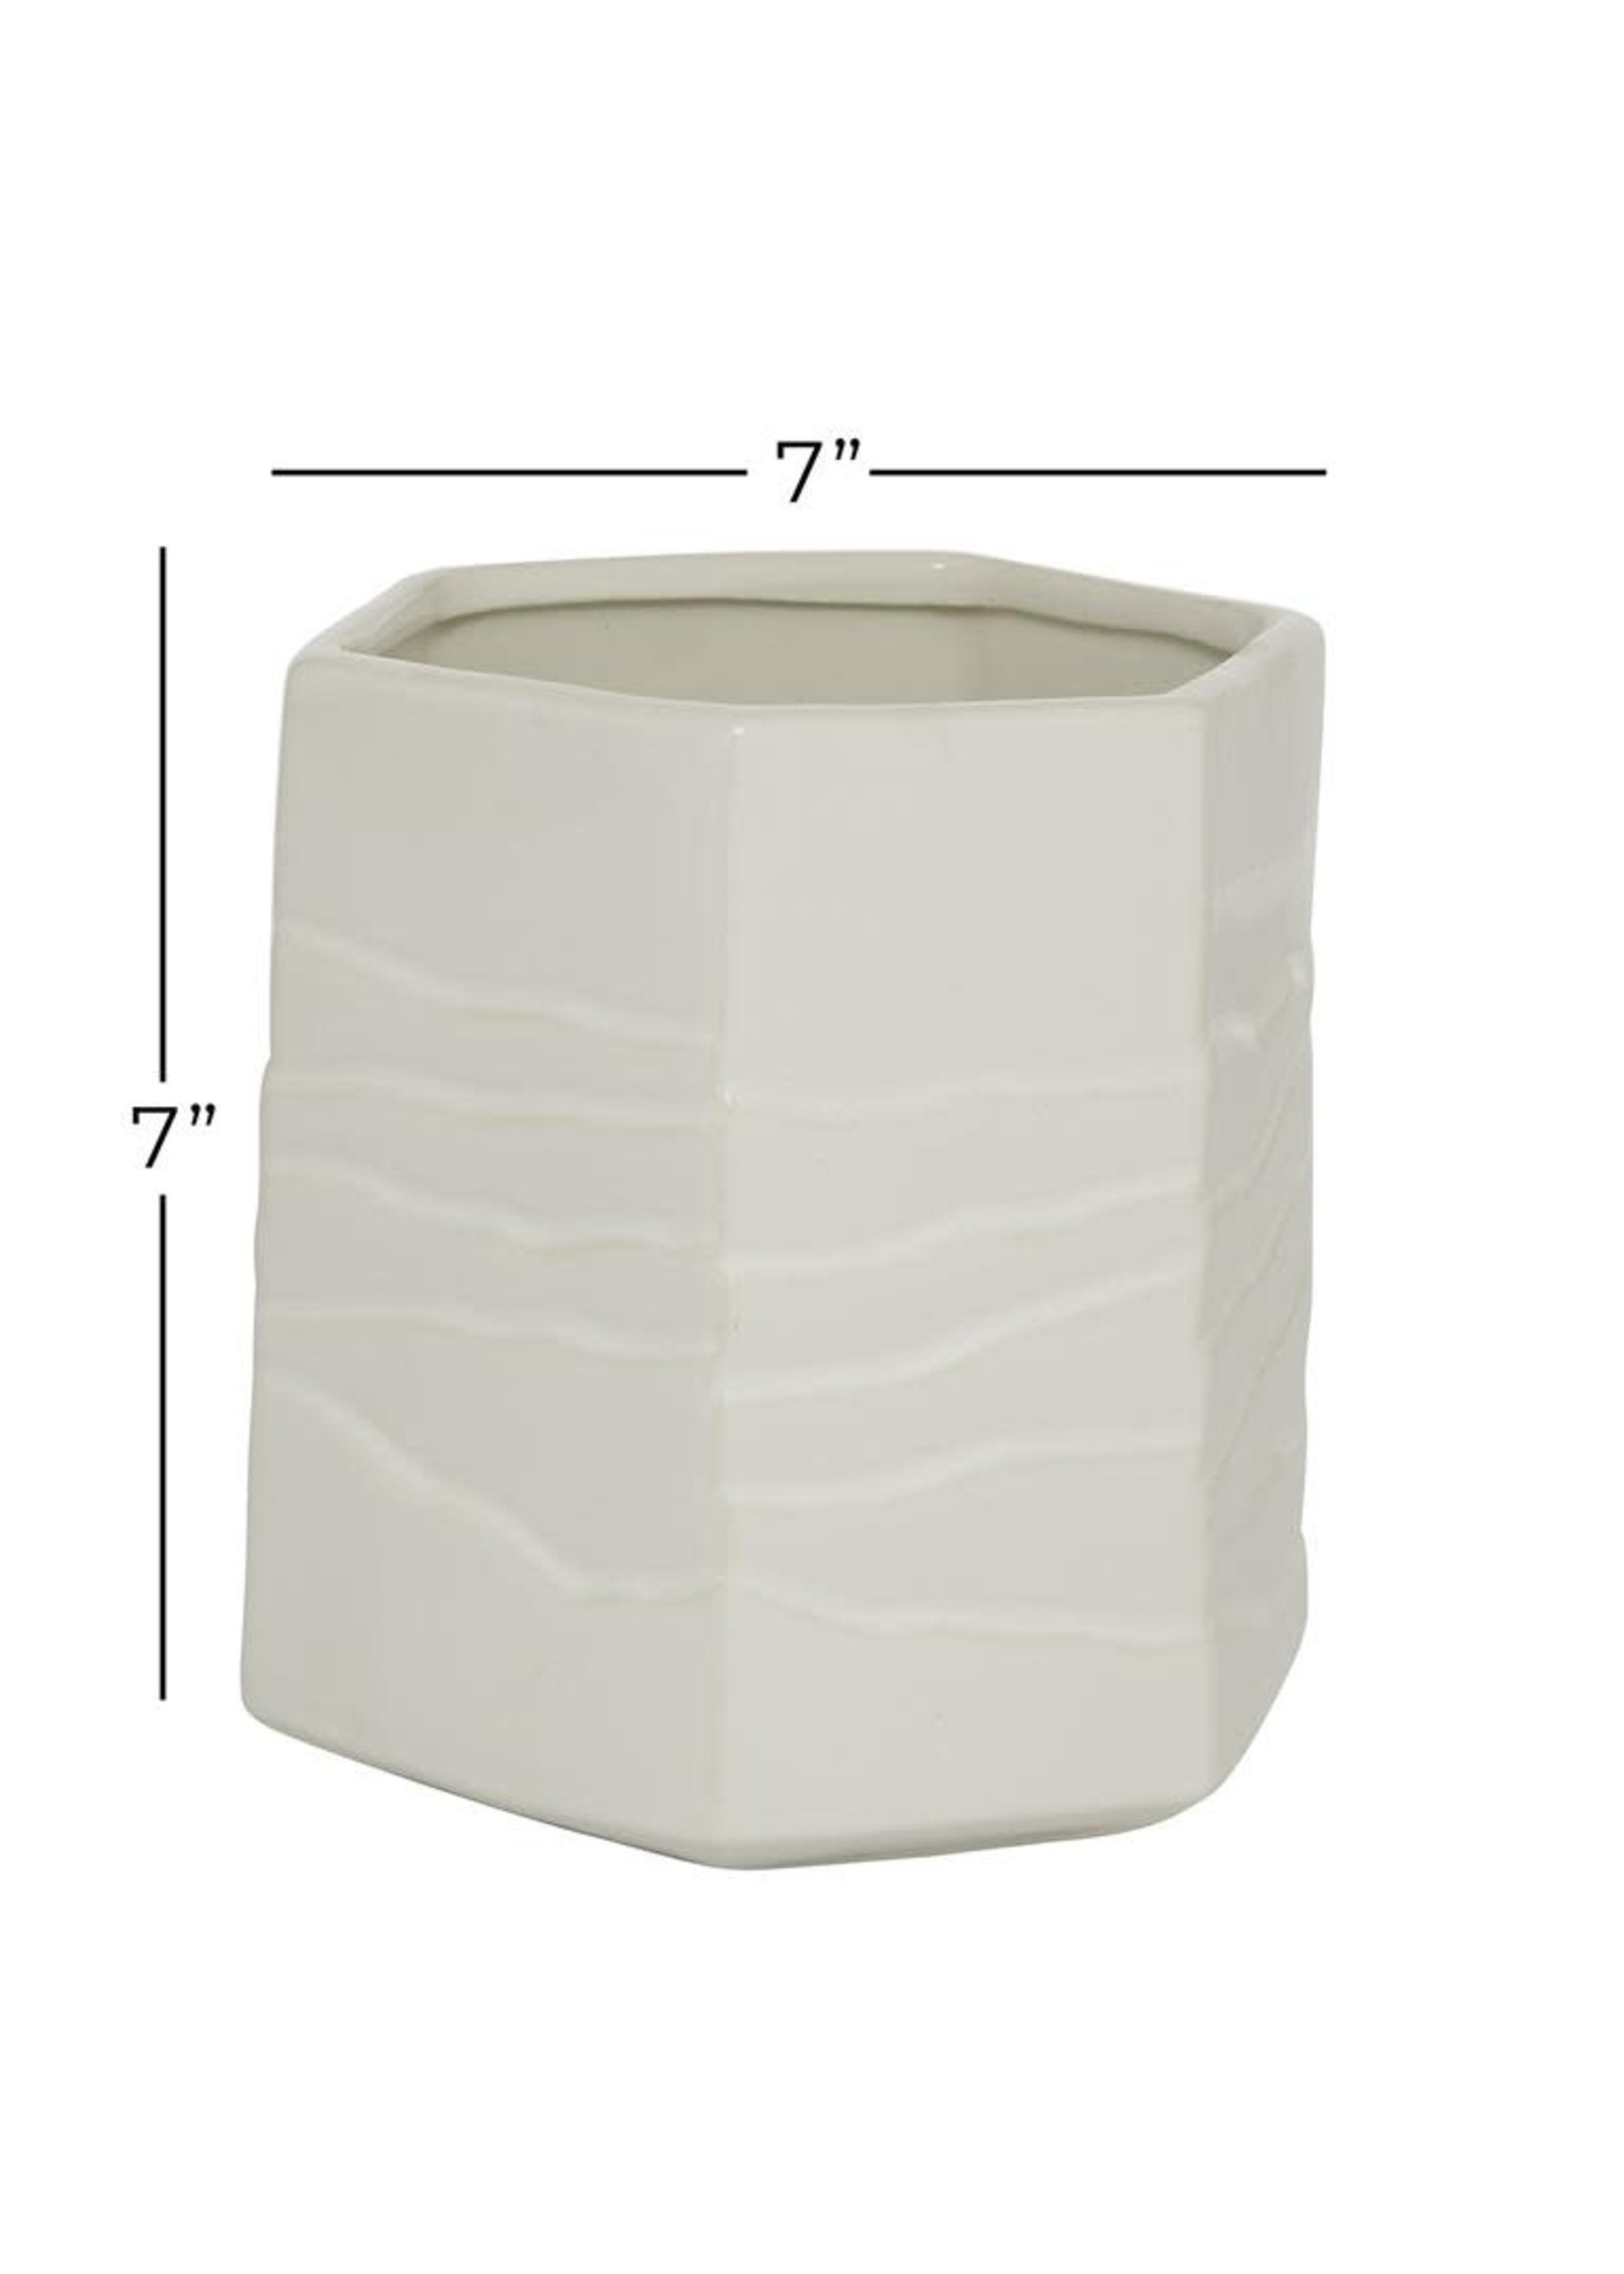 UMA Enterprises 57495 White Ceramic Contemporary Vase, 7" x 7" x 7"